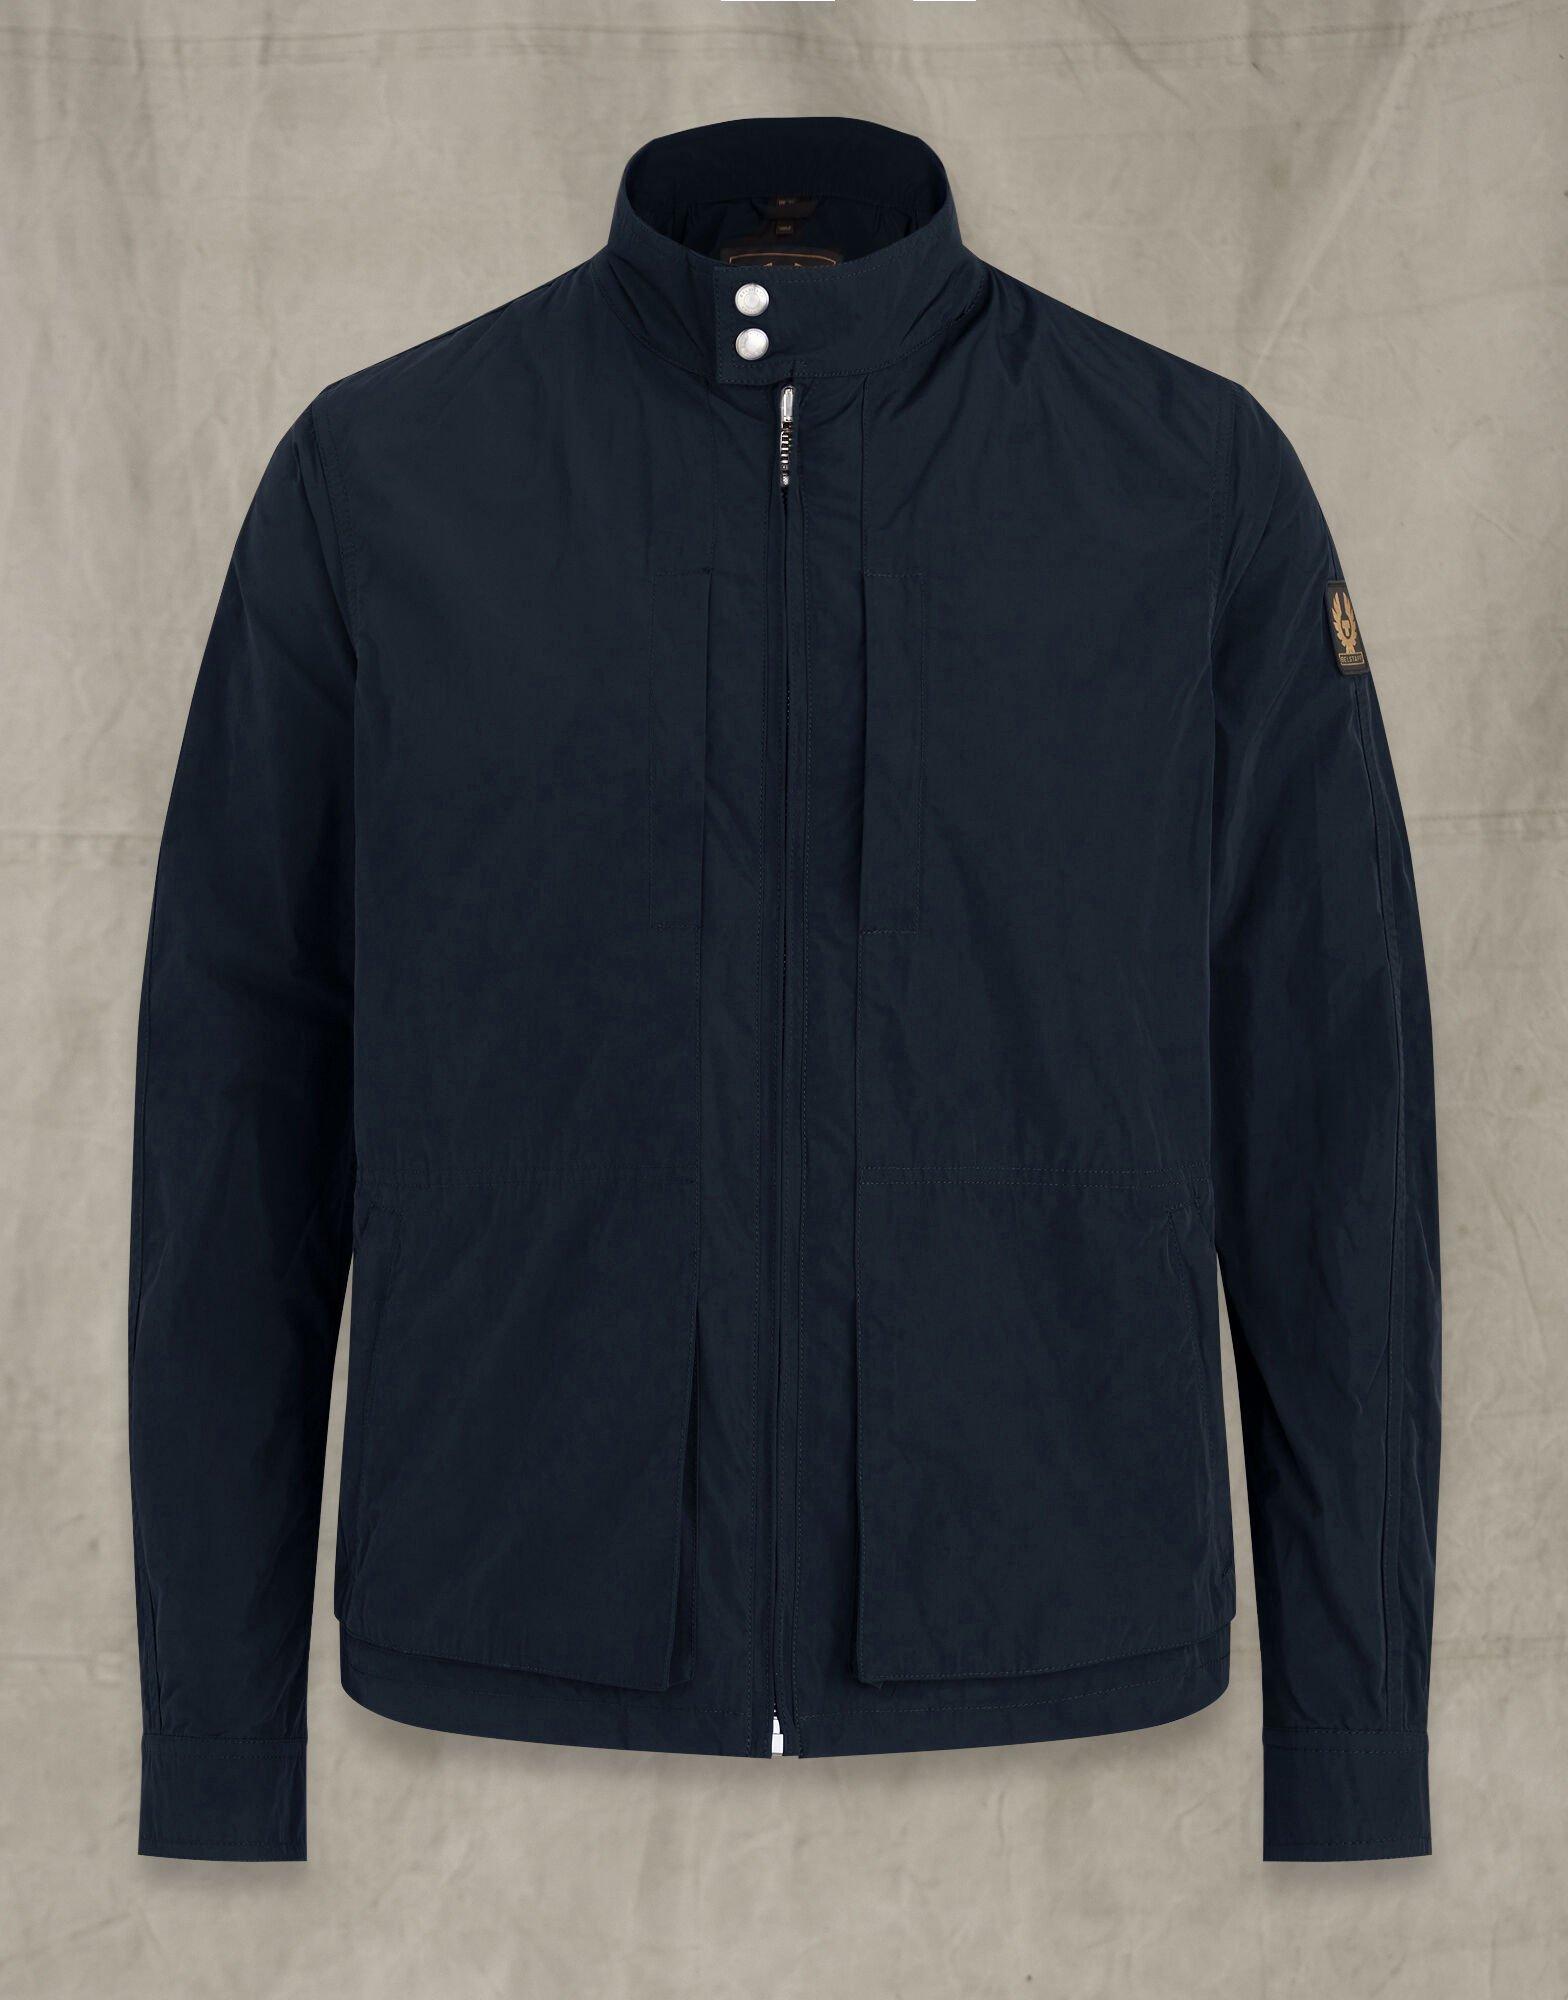 Belstaff Synthetic Grove Lightweight Jacket in Blue for Men - Lyst